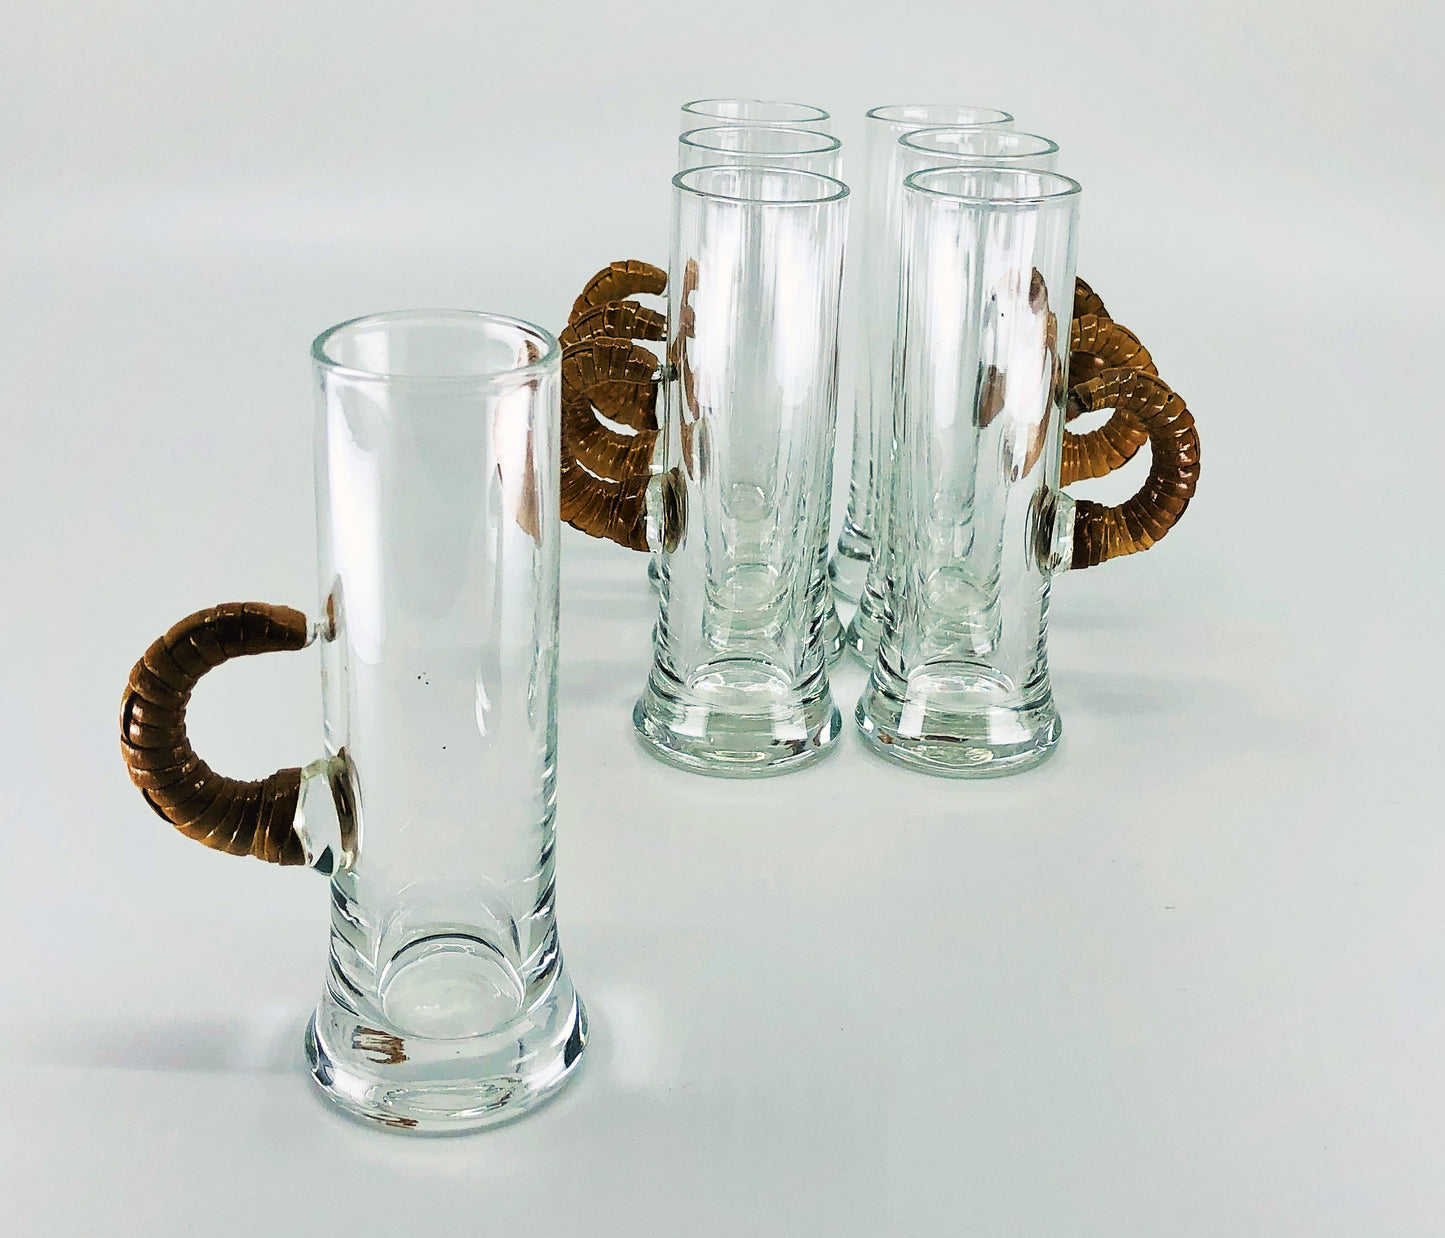 Retro Scandinavian Style Shot Glasses with Wicker Handles, Set of 10*